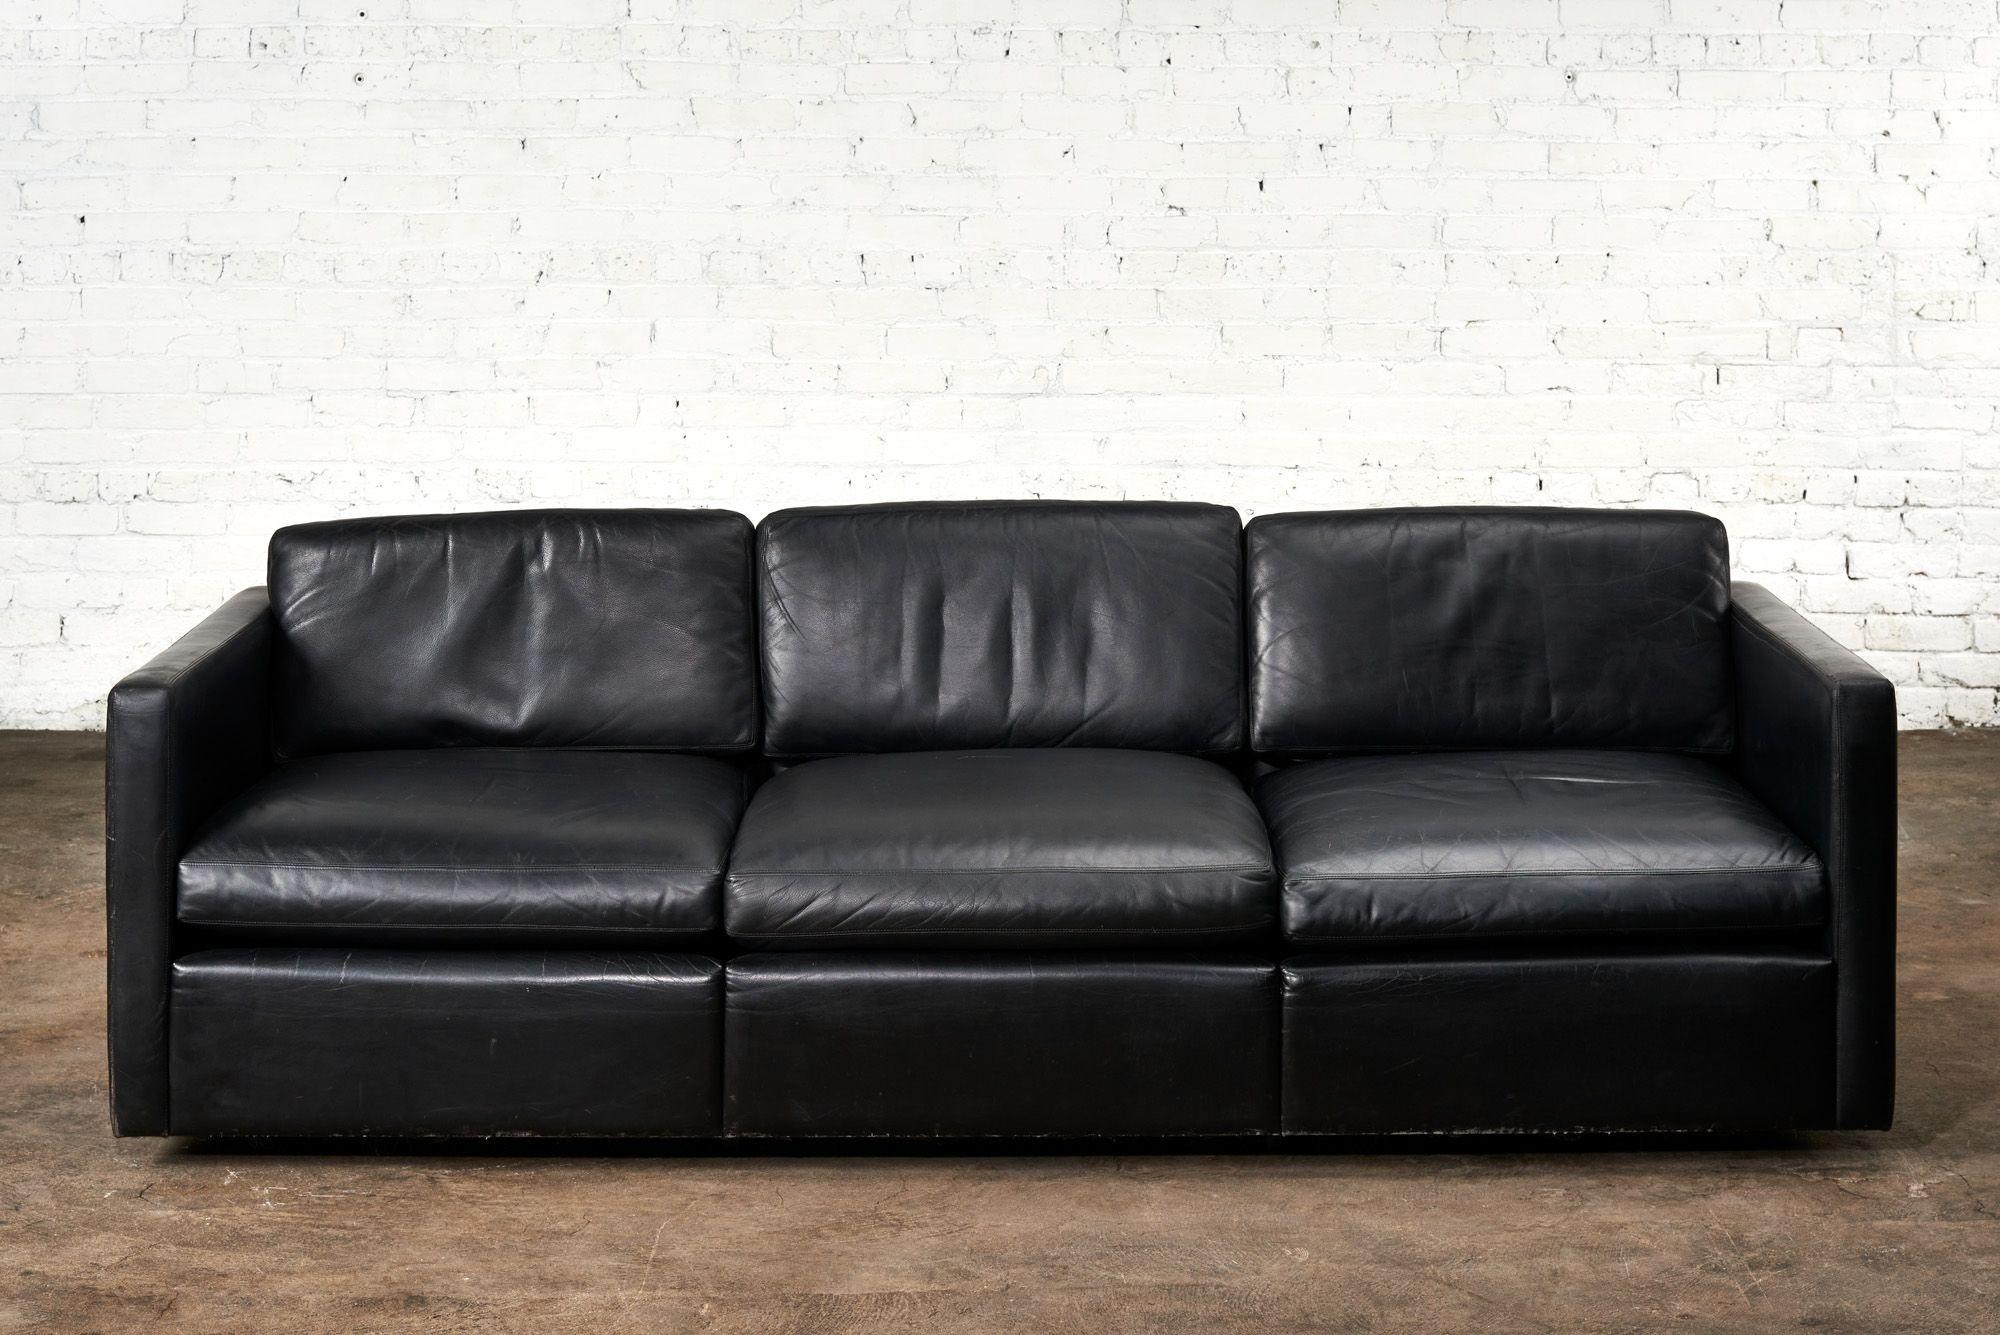 Knoll Pfister black leather sofa, 1971. Original leather.